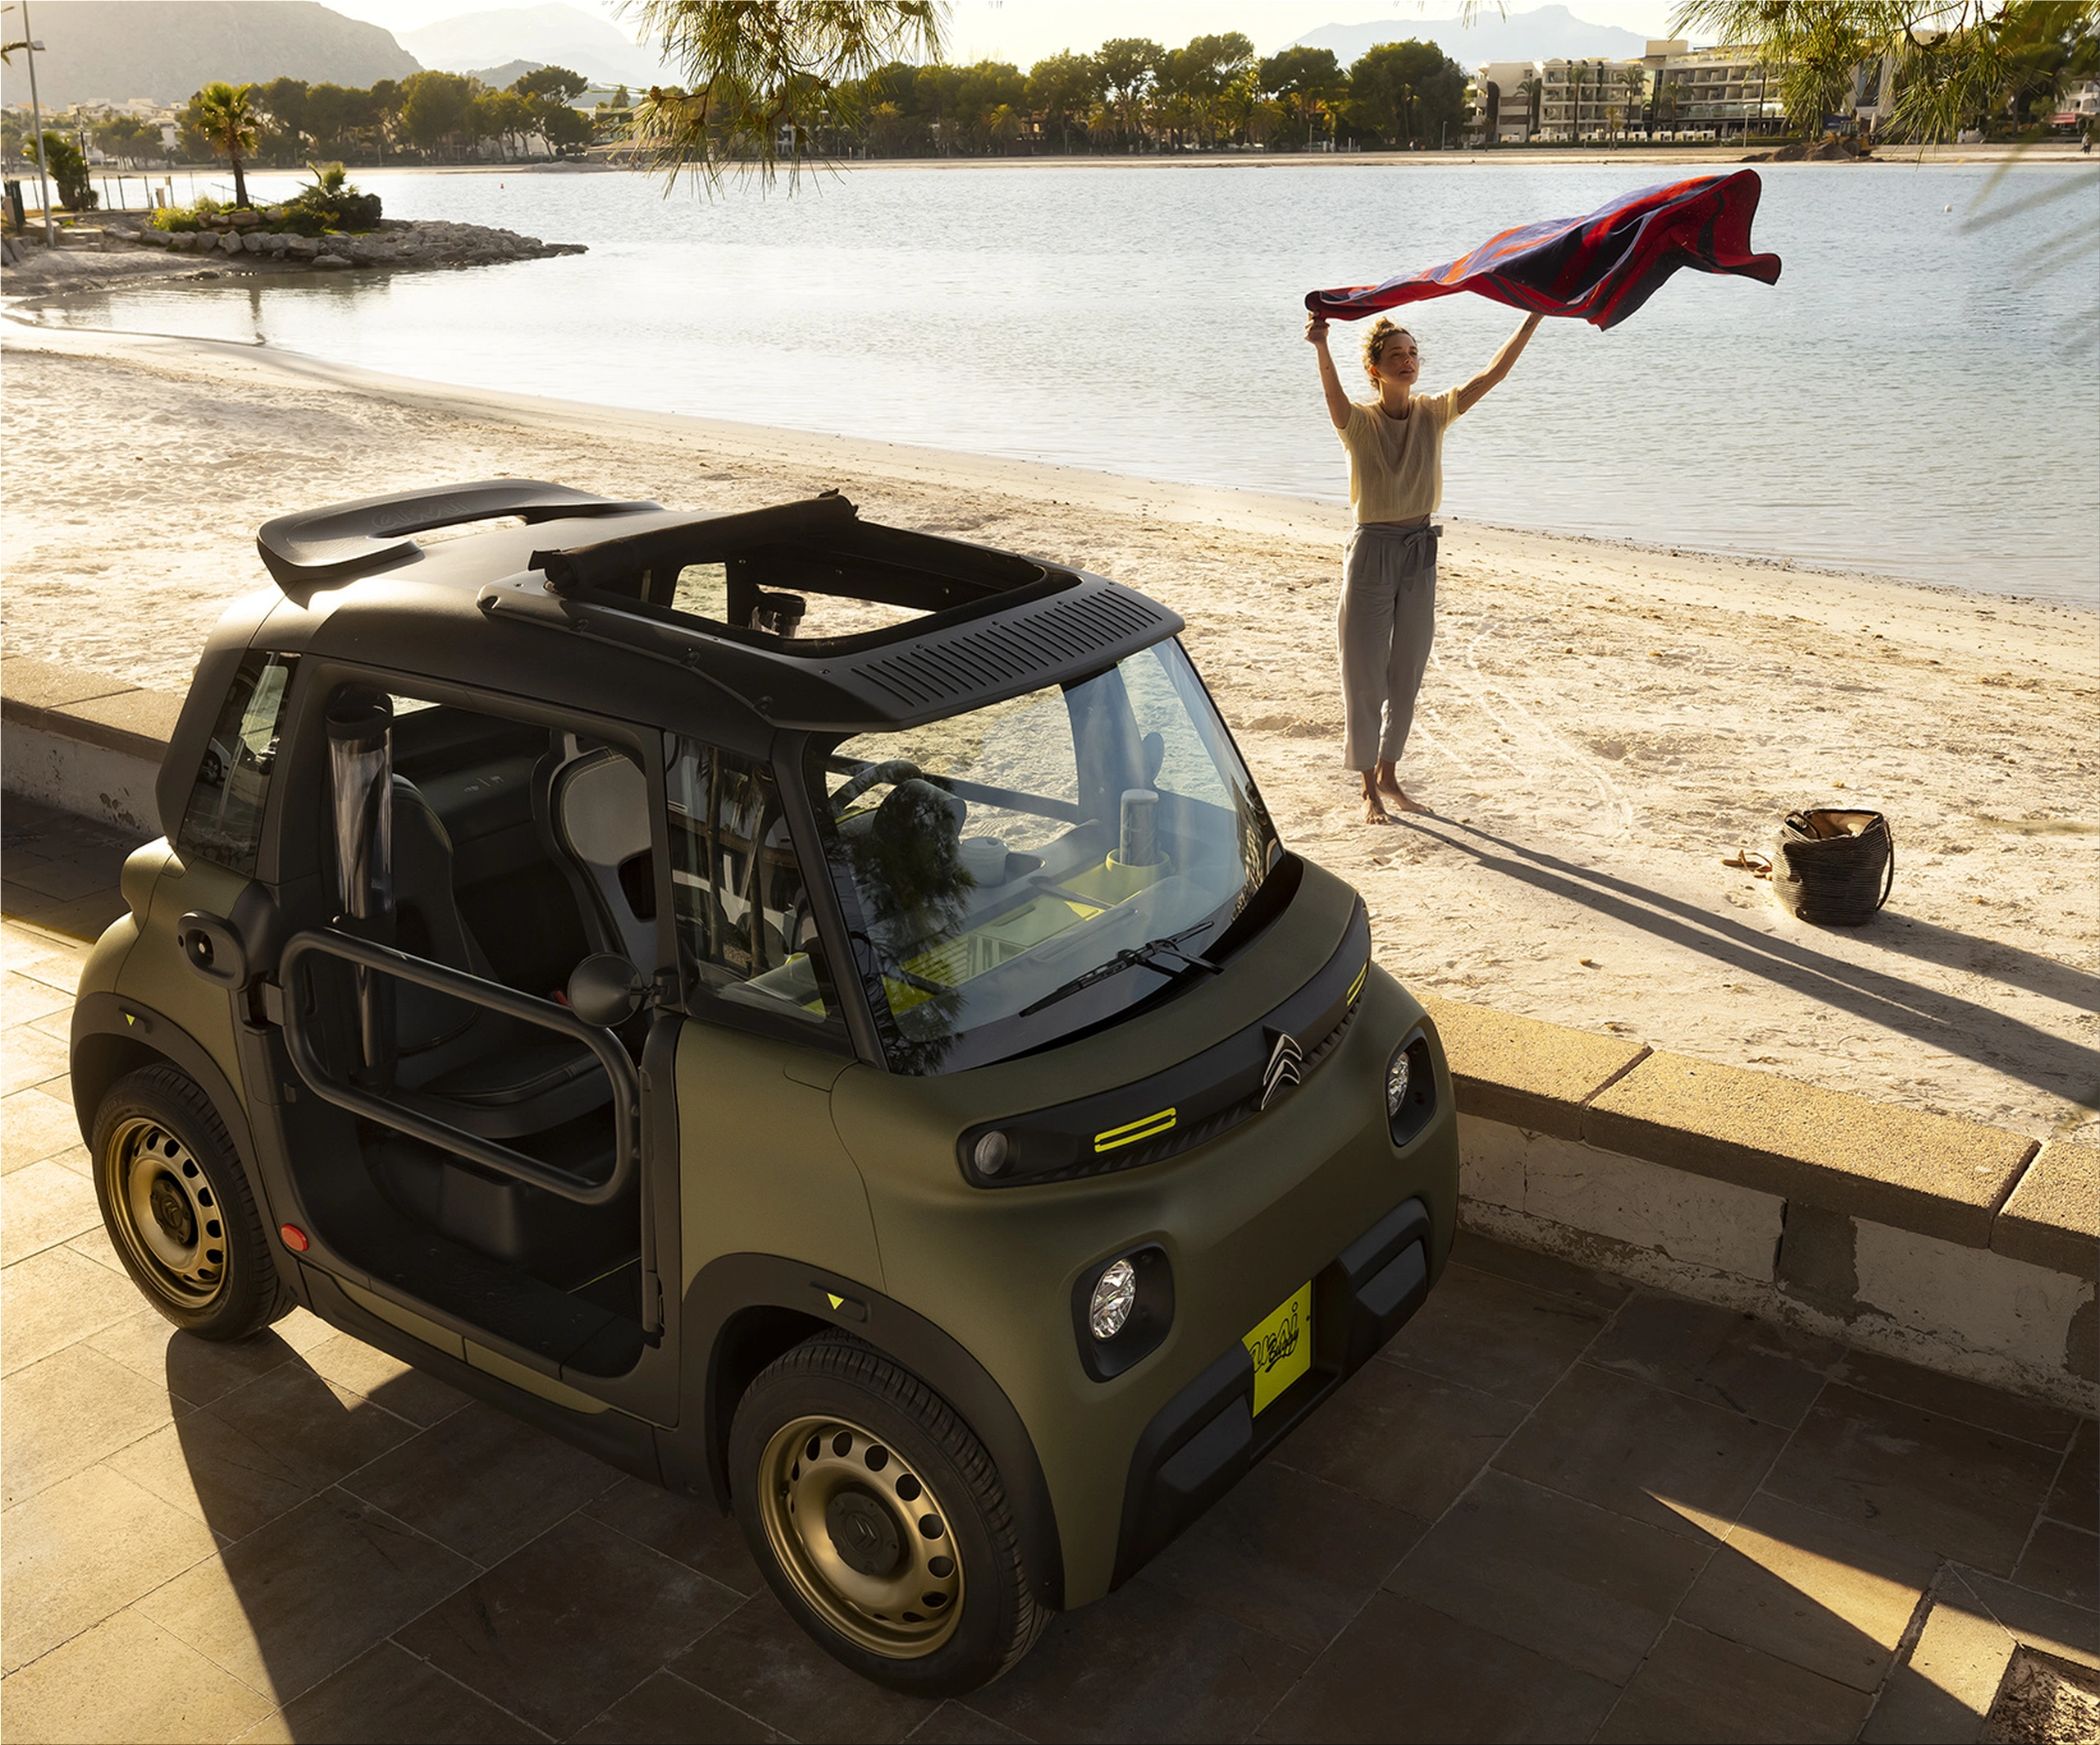 Citroën's tiny Ami electric car makes lovable micro-adventure buggy